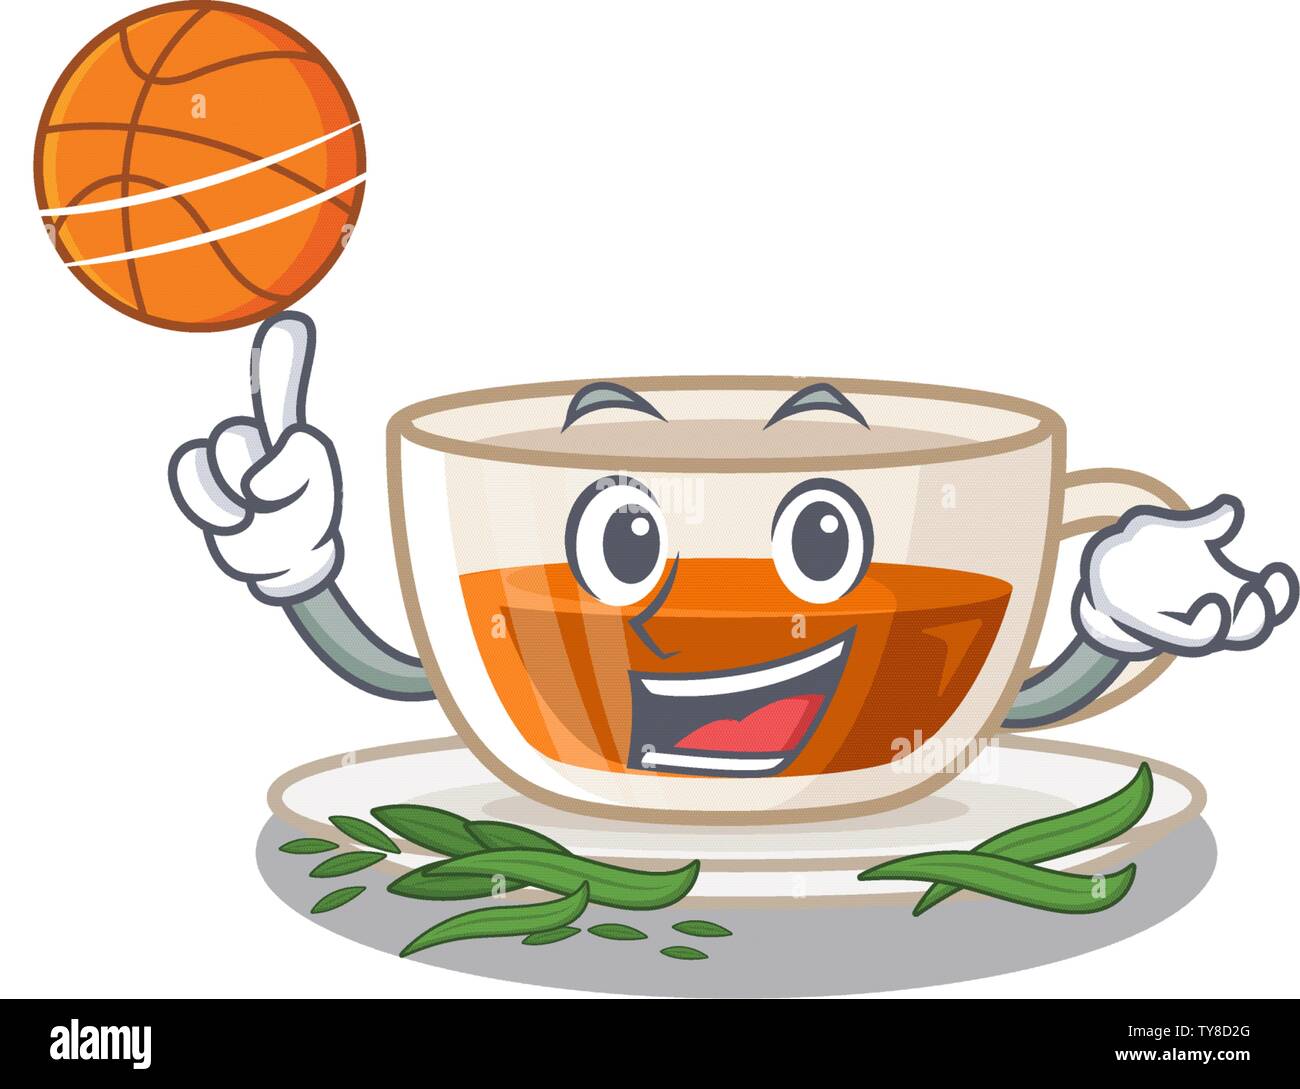 With basketball darjeeling tea isolated in the cartoon Stock Vector